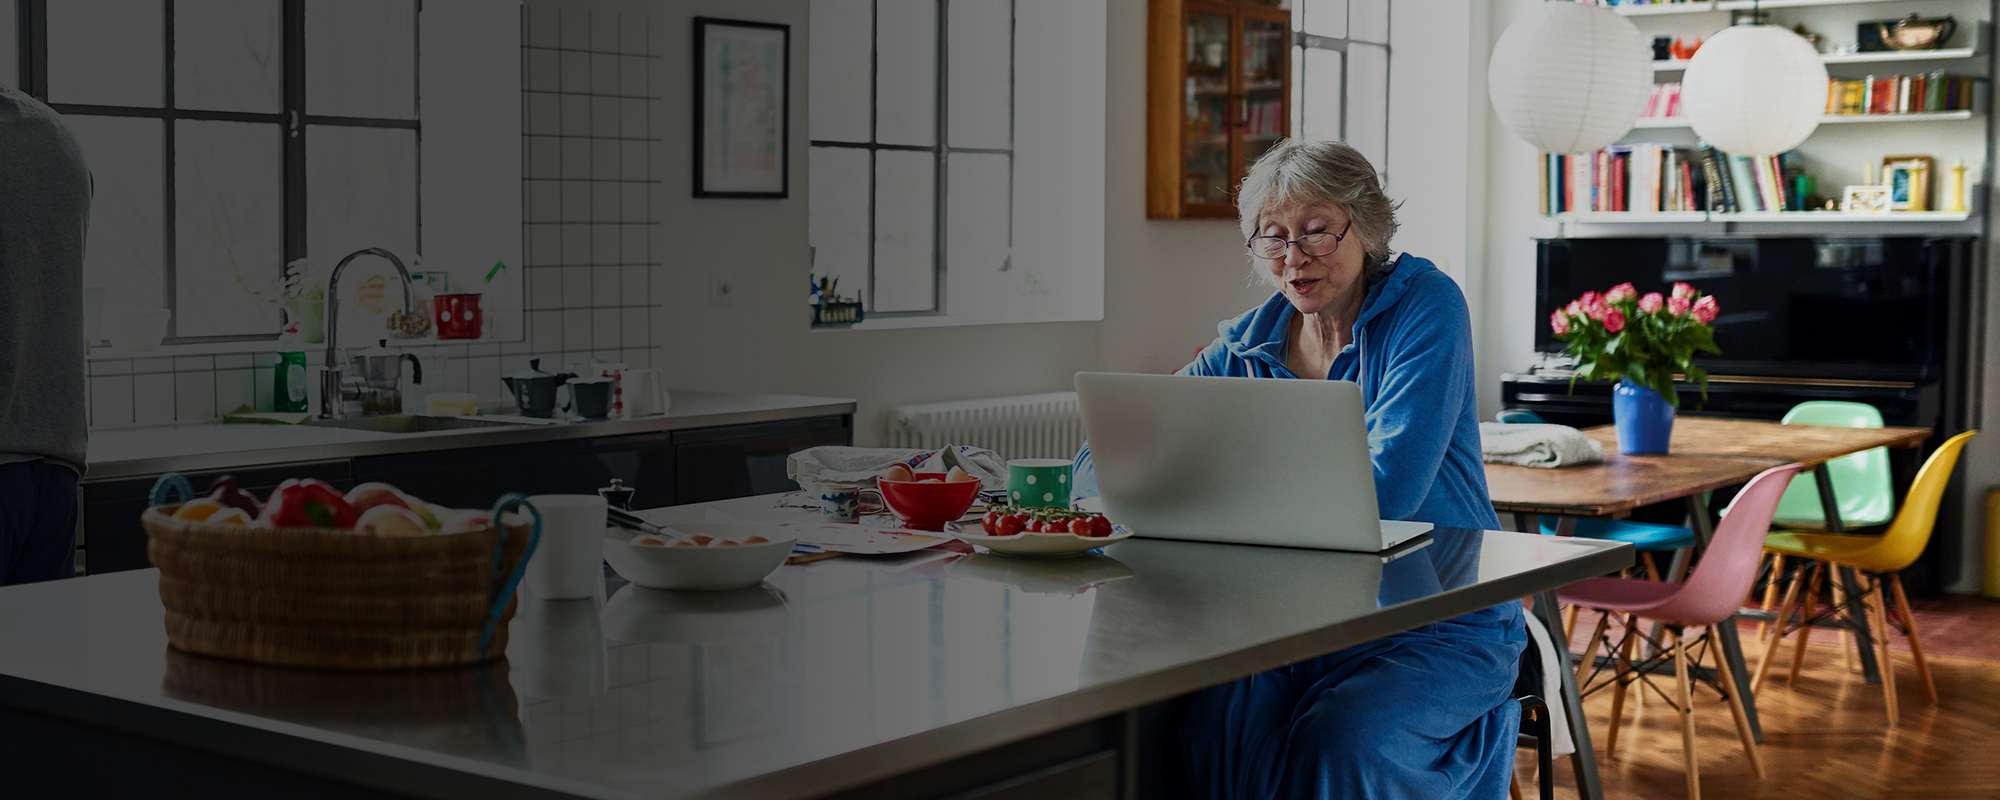 Women on laptop